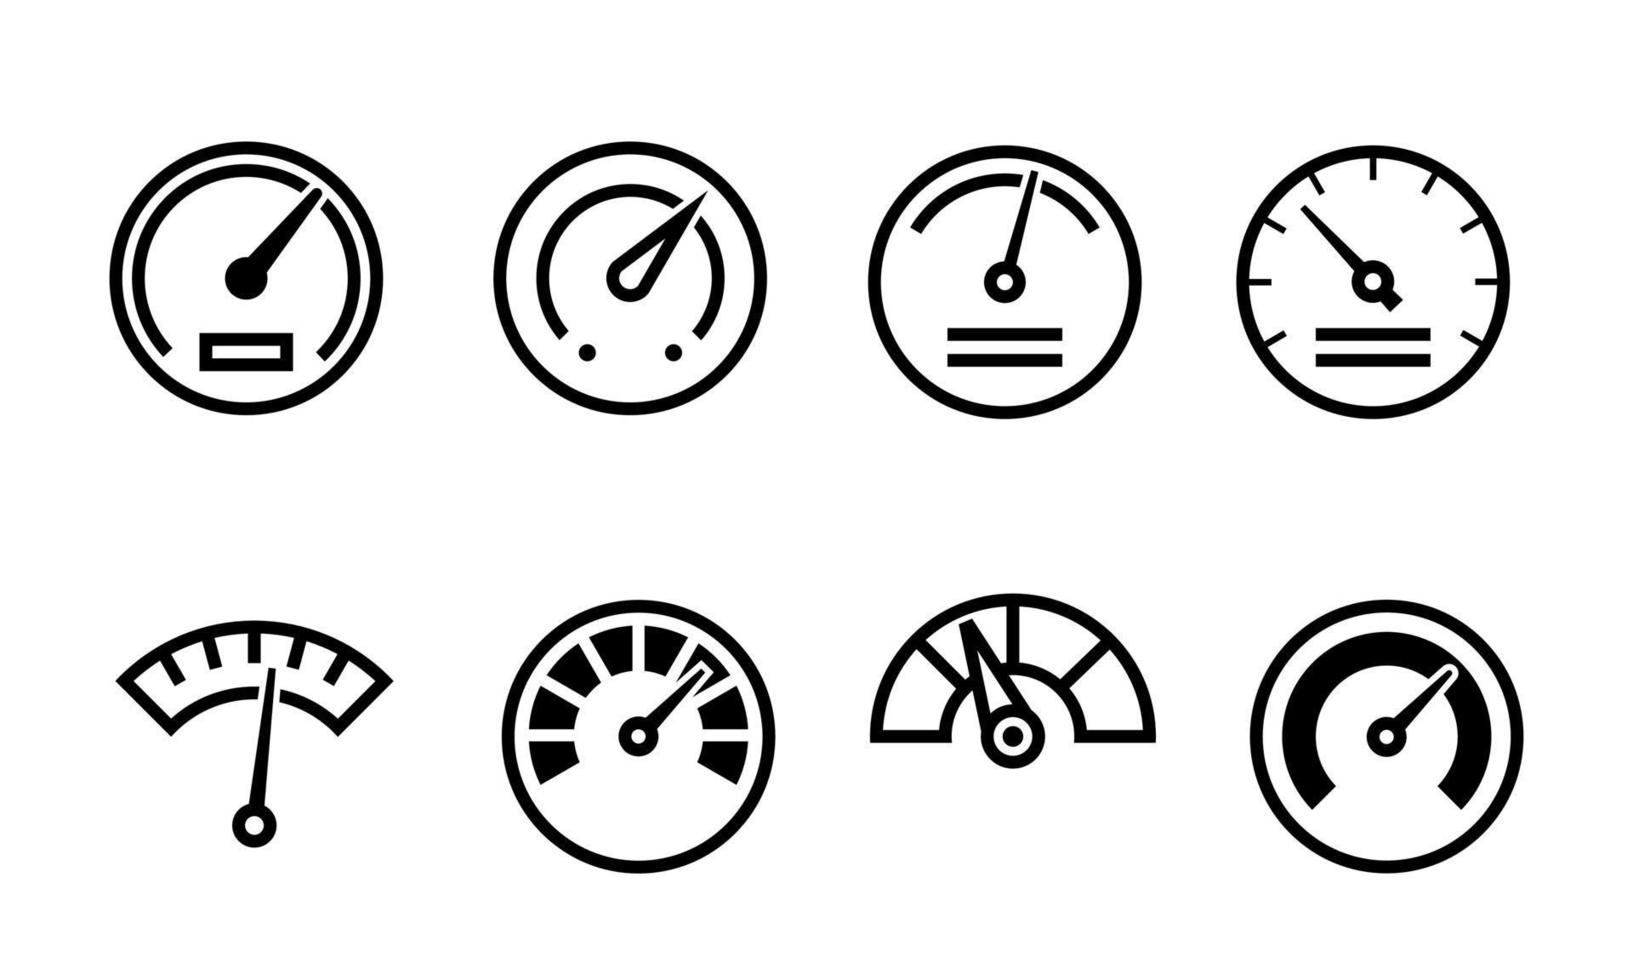 Vector illustration of gauge icon set. Suitable for design element of speedometer, pressure gauge, and performance level indicator.